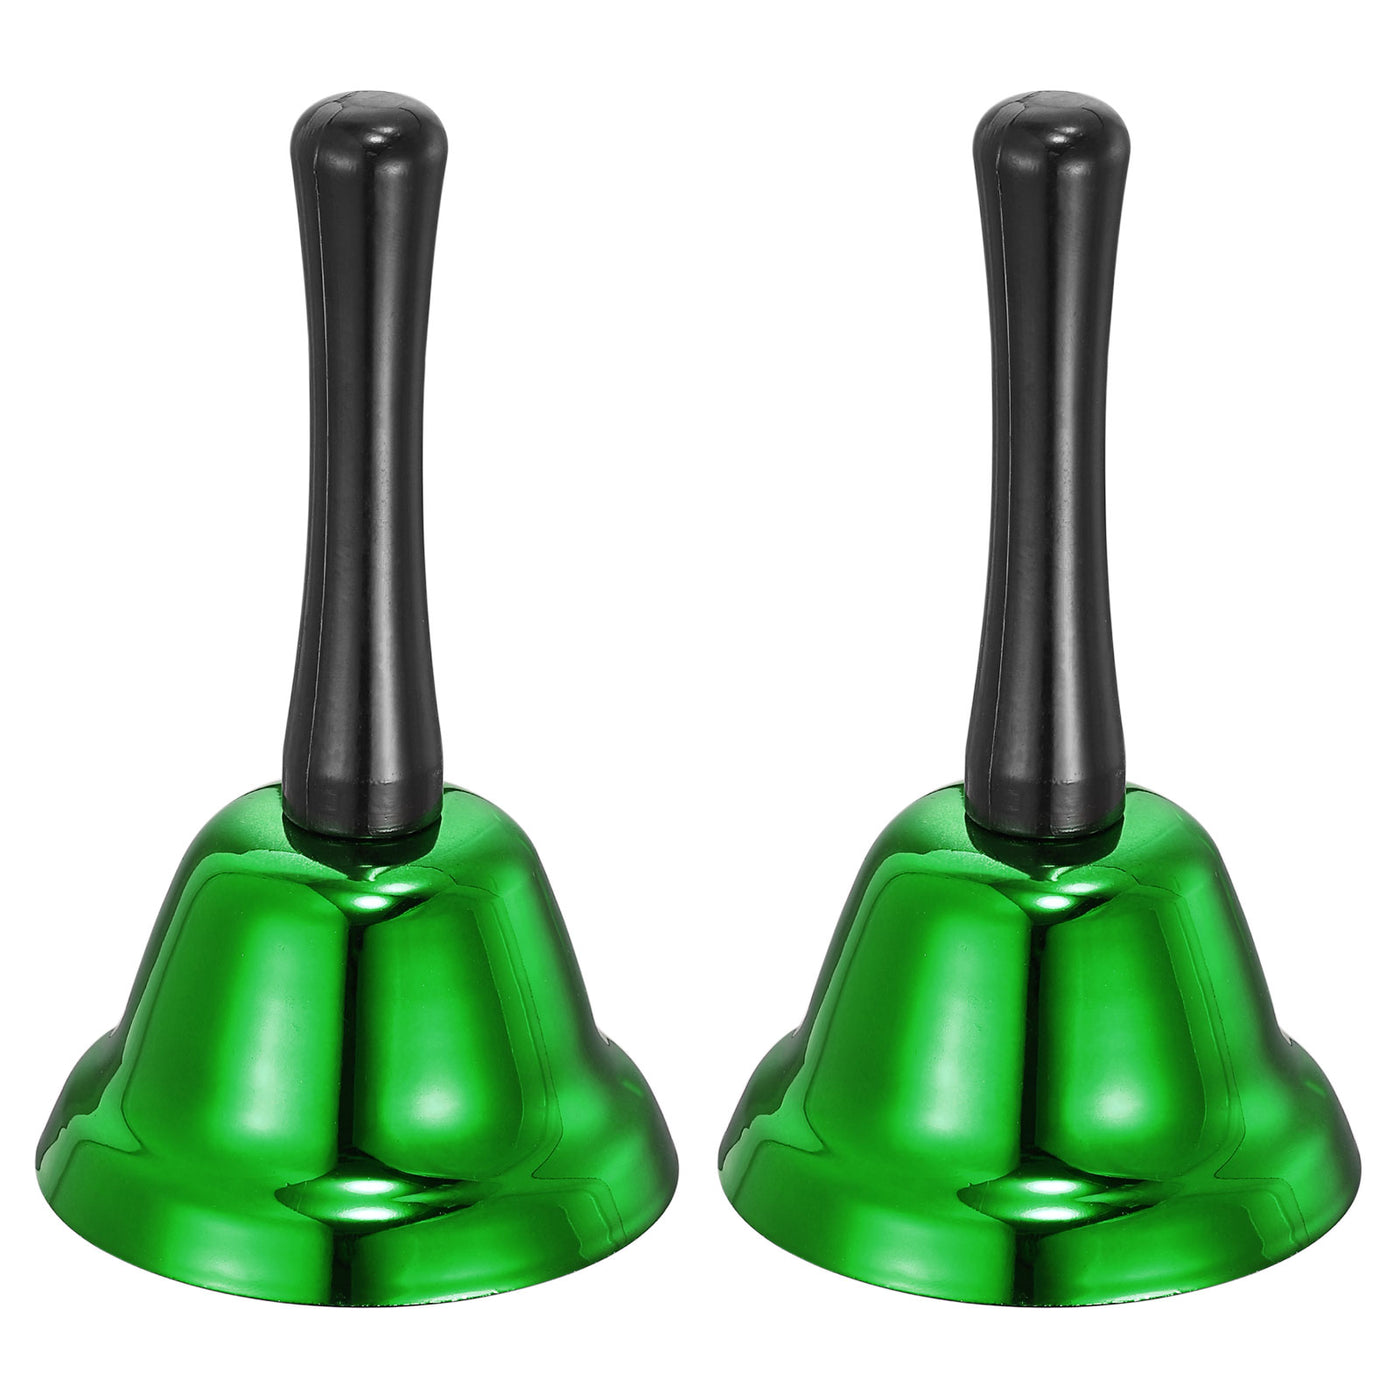 uxcell Uxcell Loud Hand Bell, 2pcs 75mm(2.95") Dinner Bell for Classroom, Service, Green